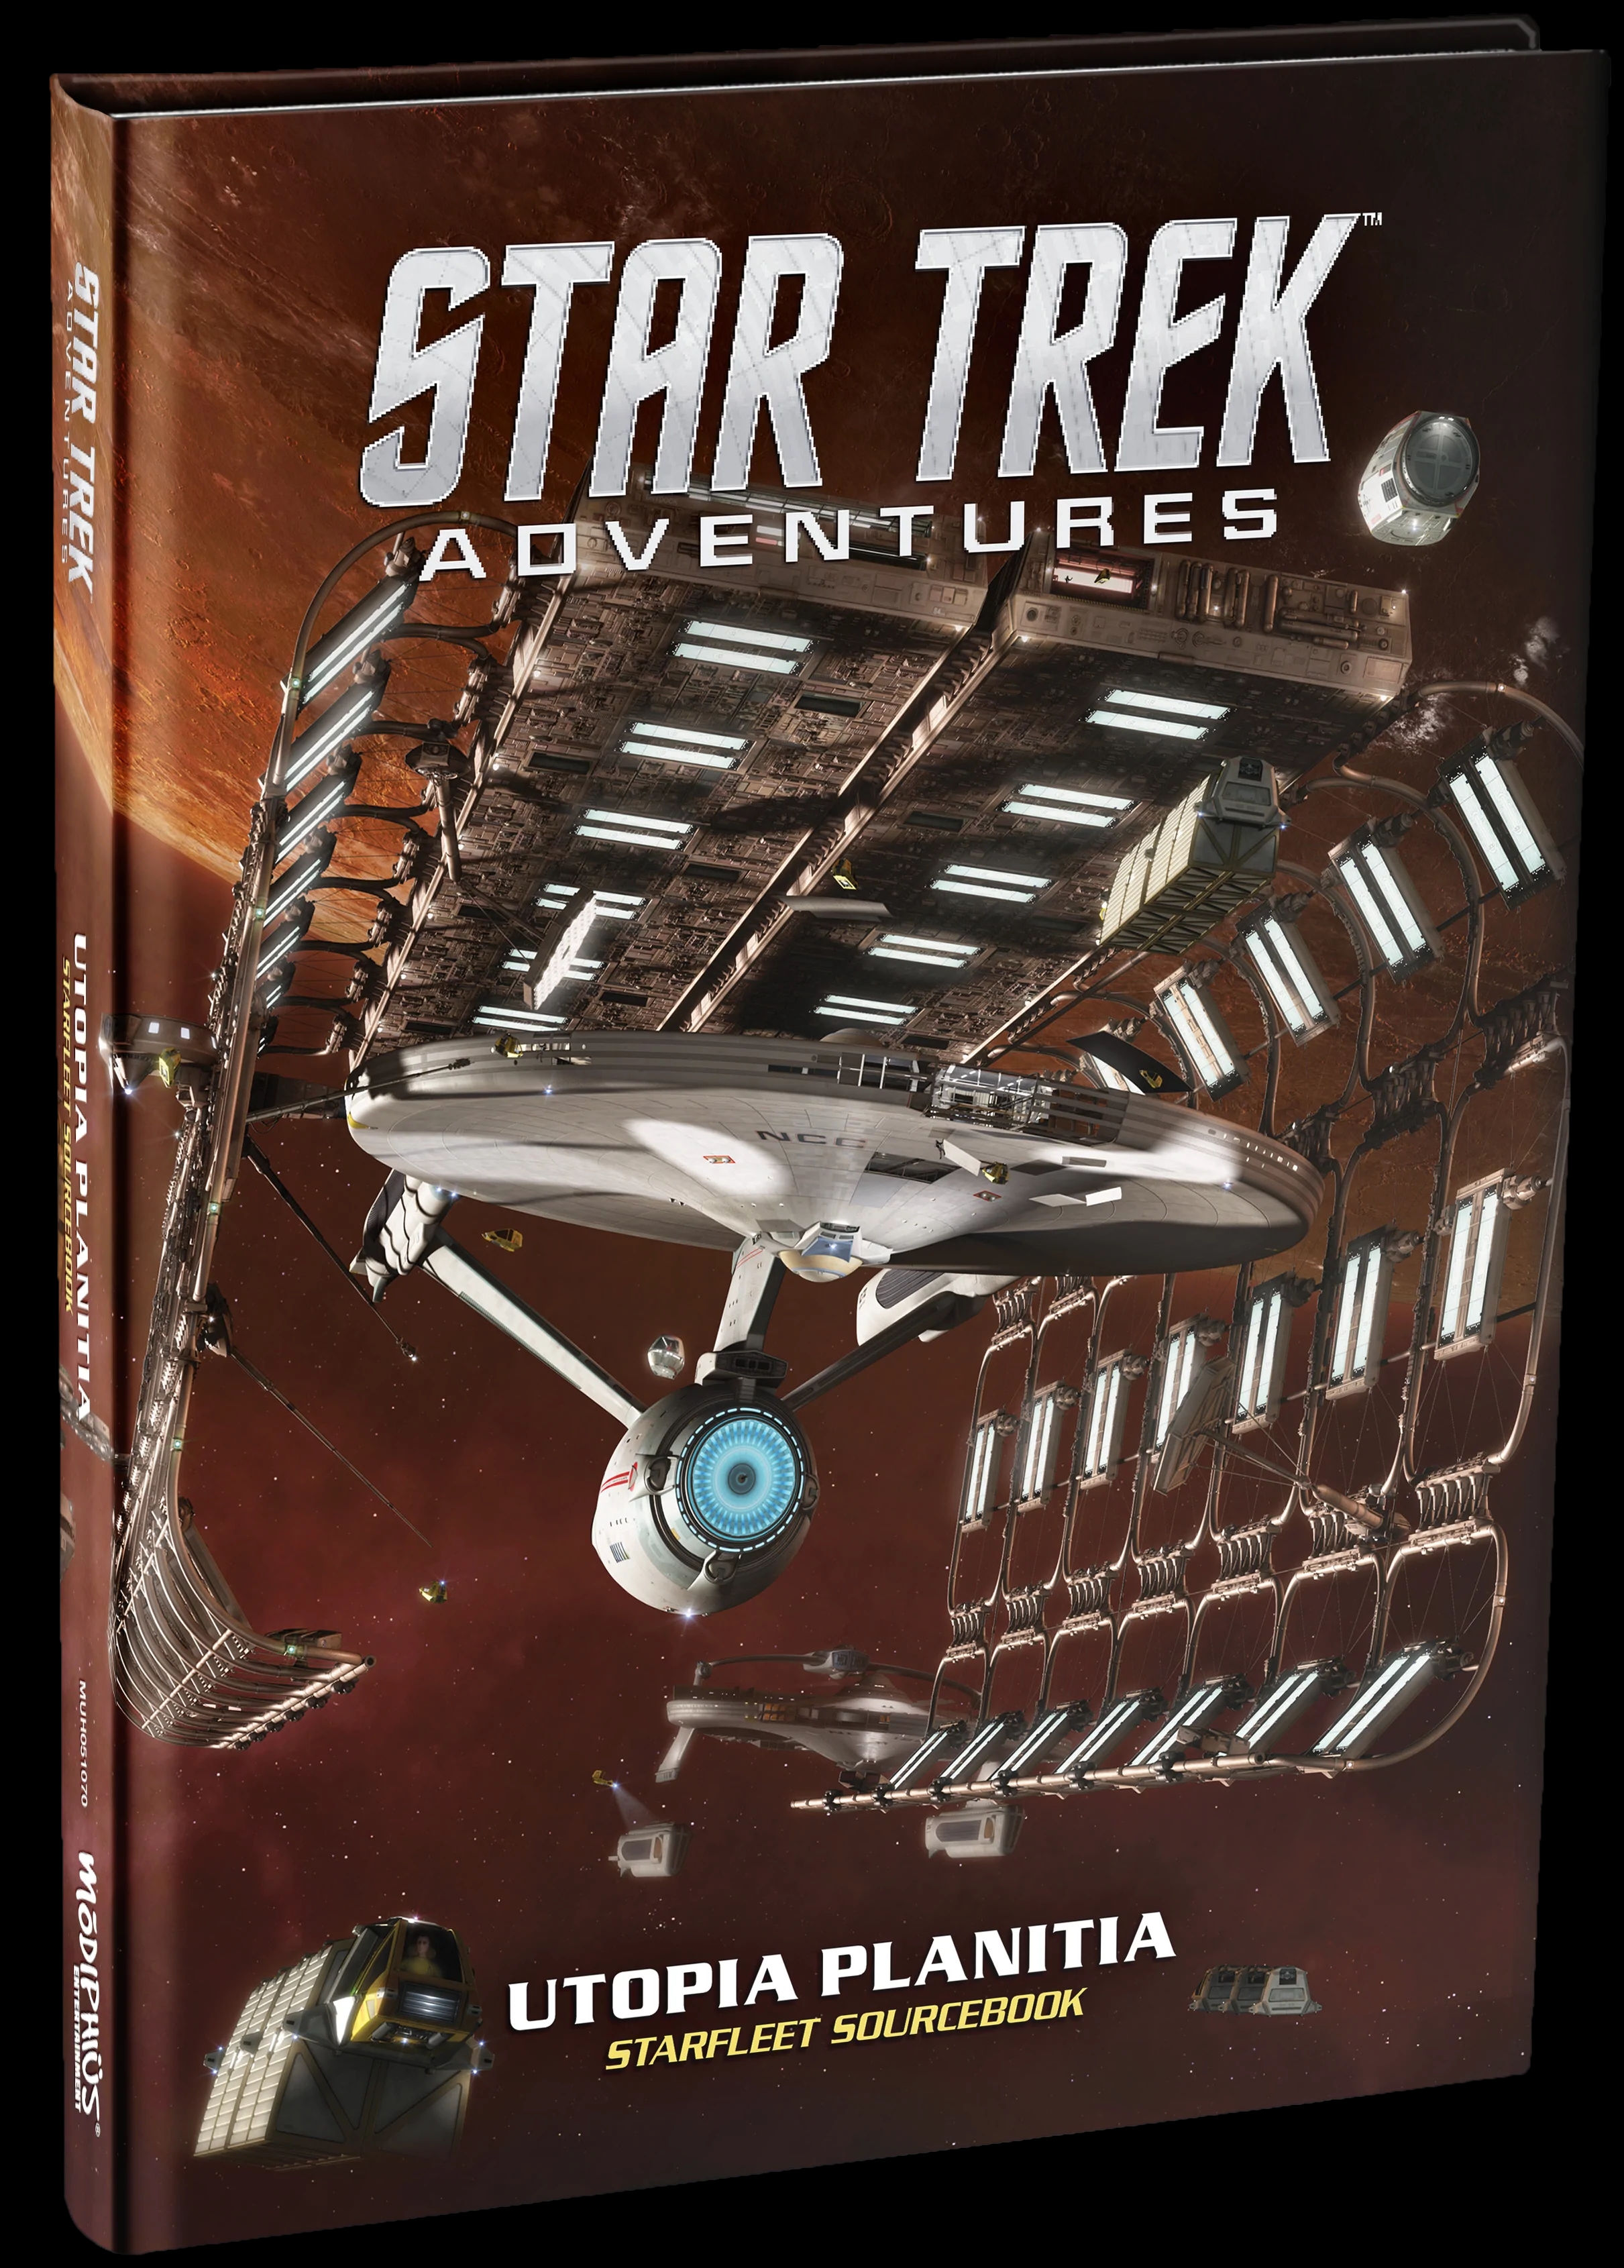 Star-Trek-UtopiaPlanitia-Cover-Promo-No-Logos